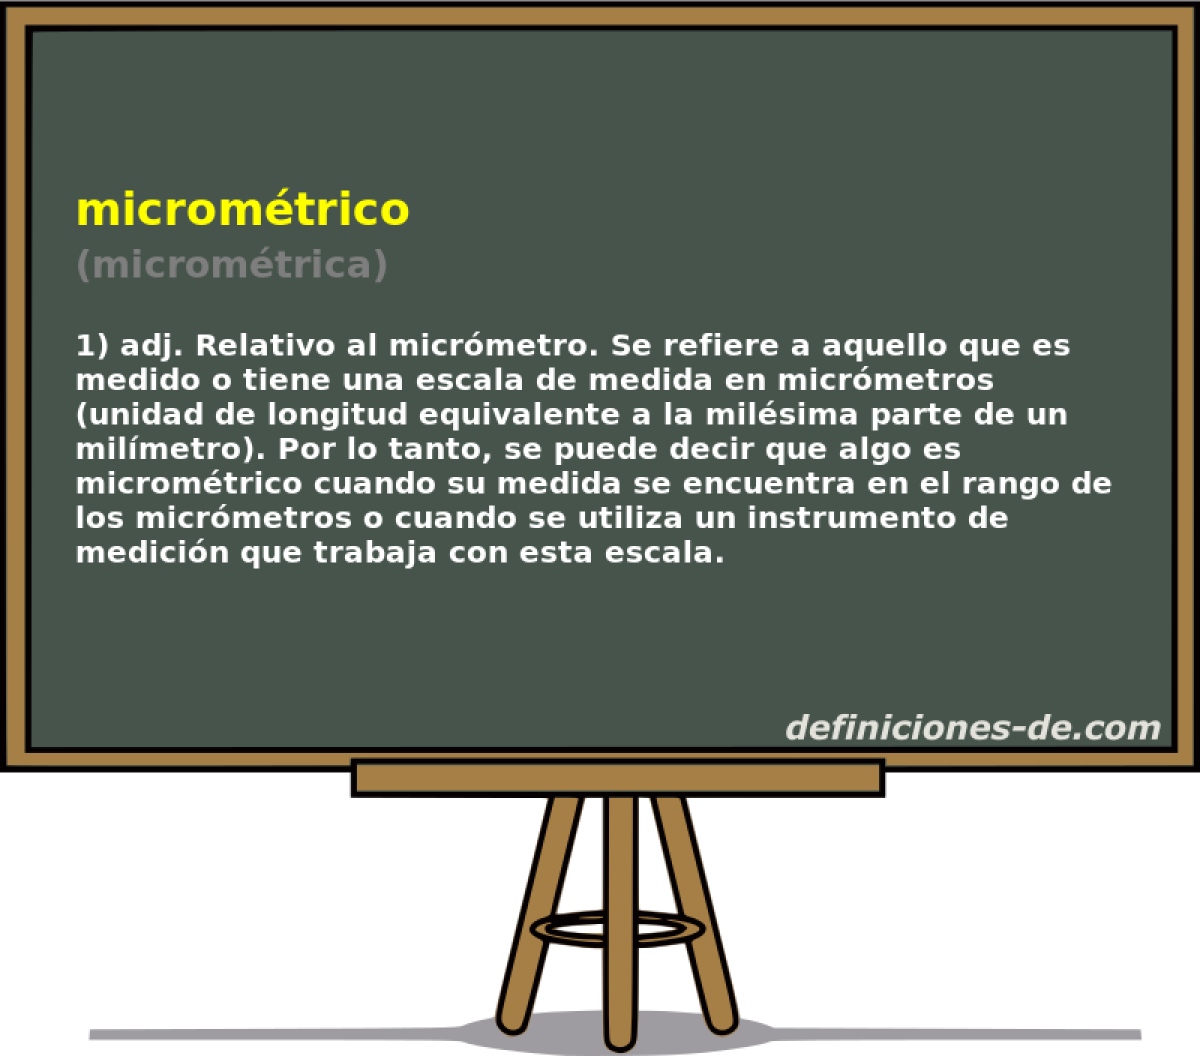 micromtrico (micromtrica)